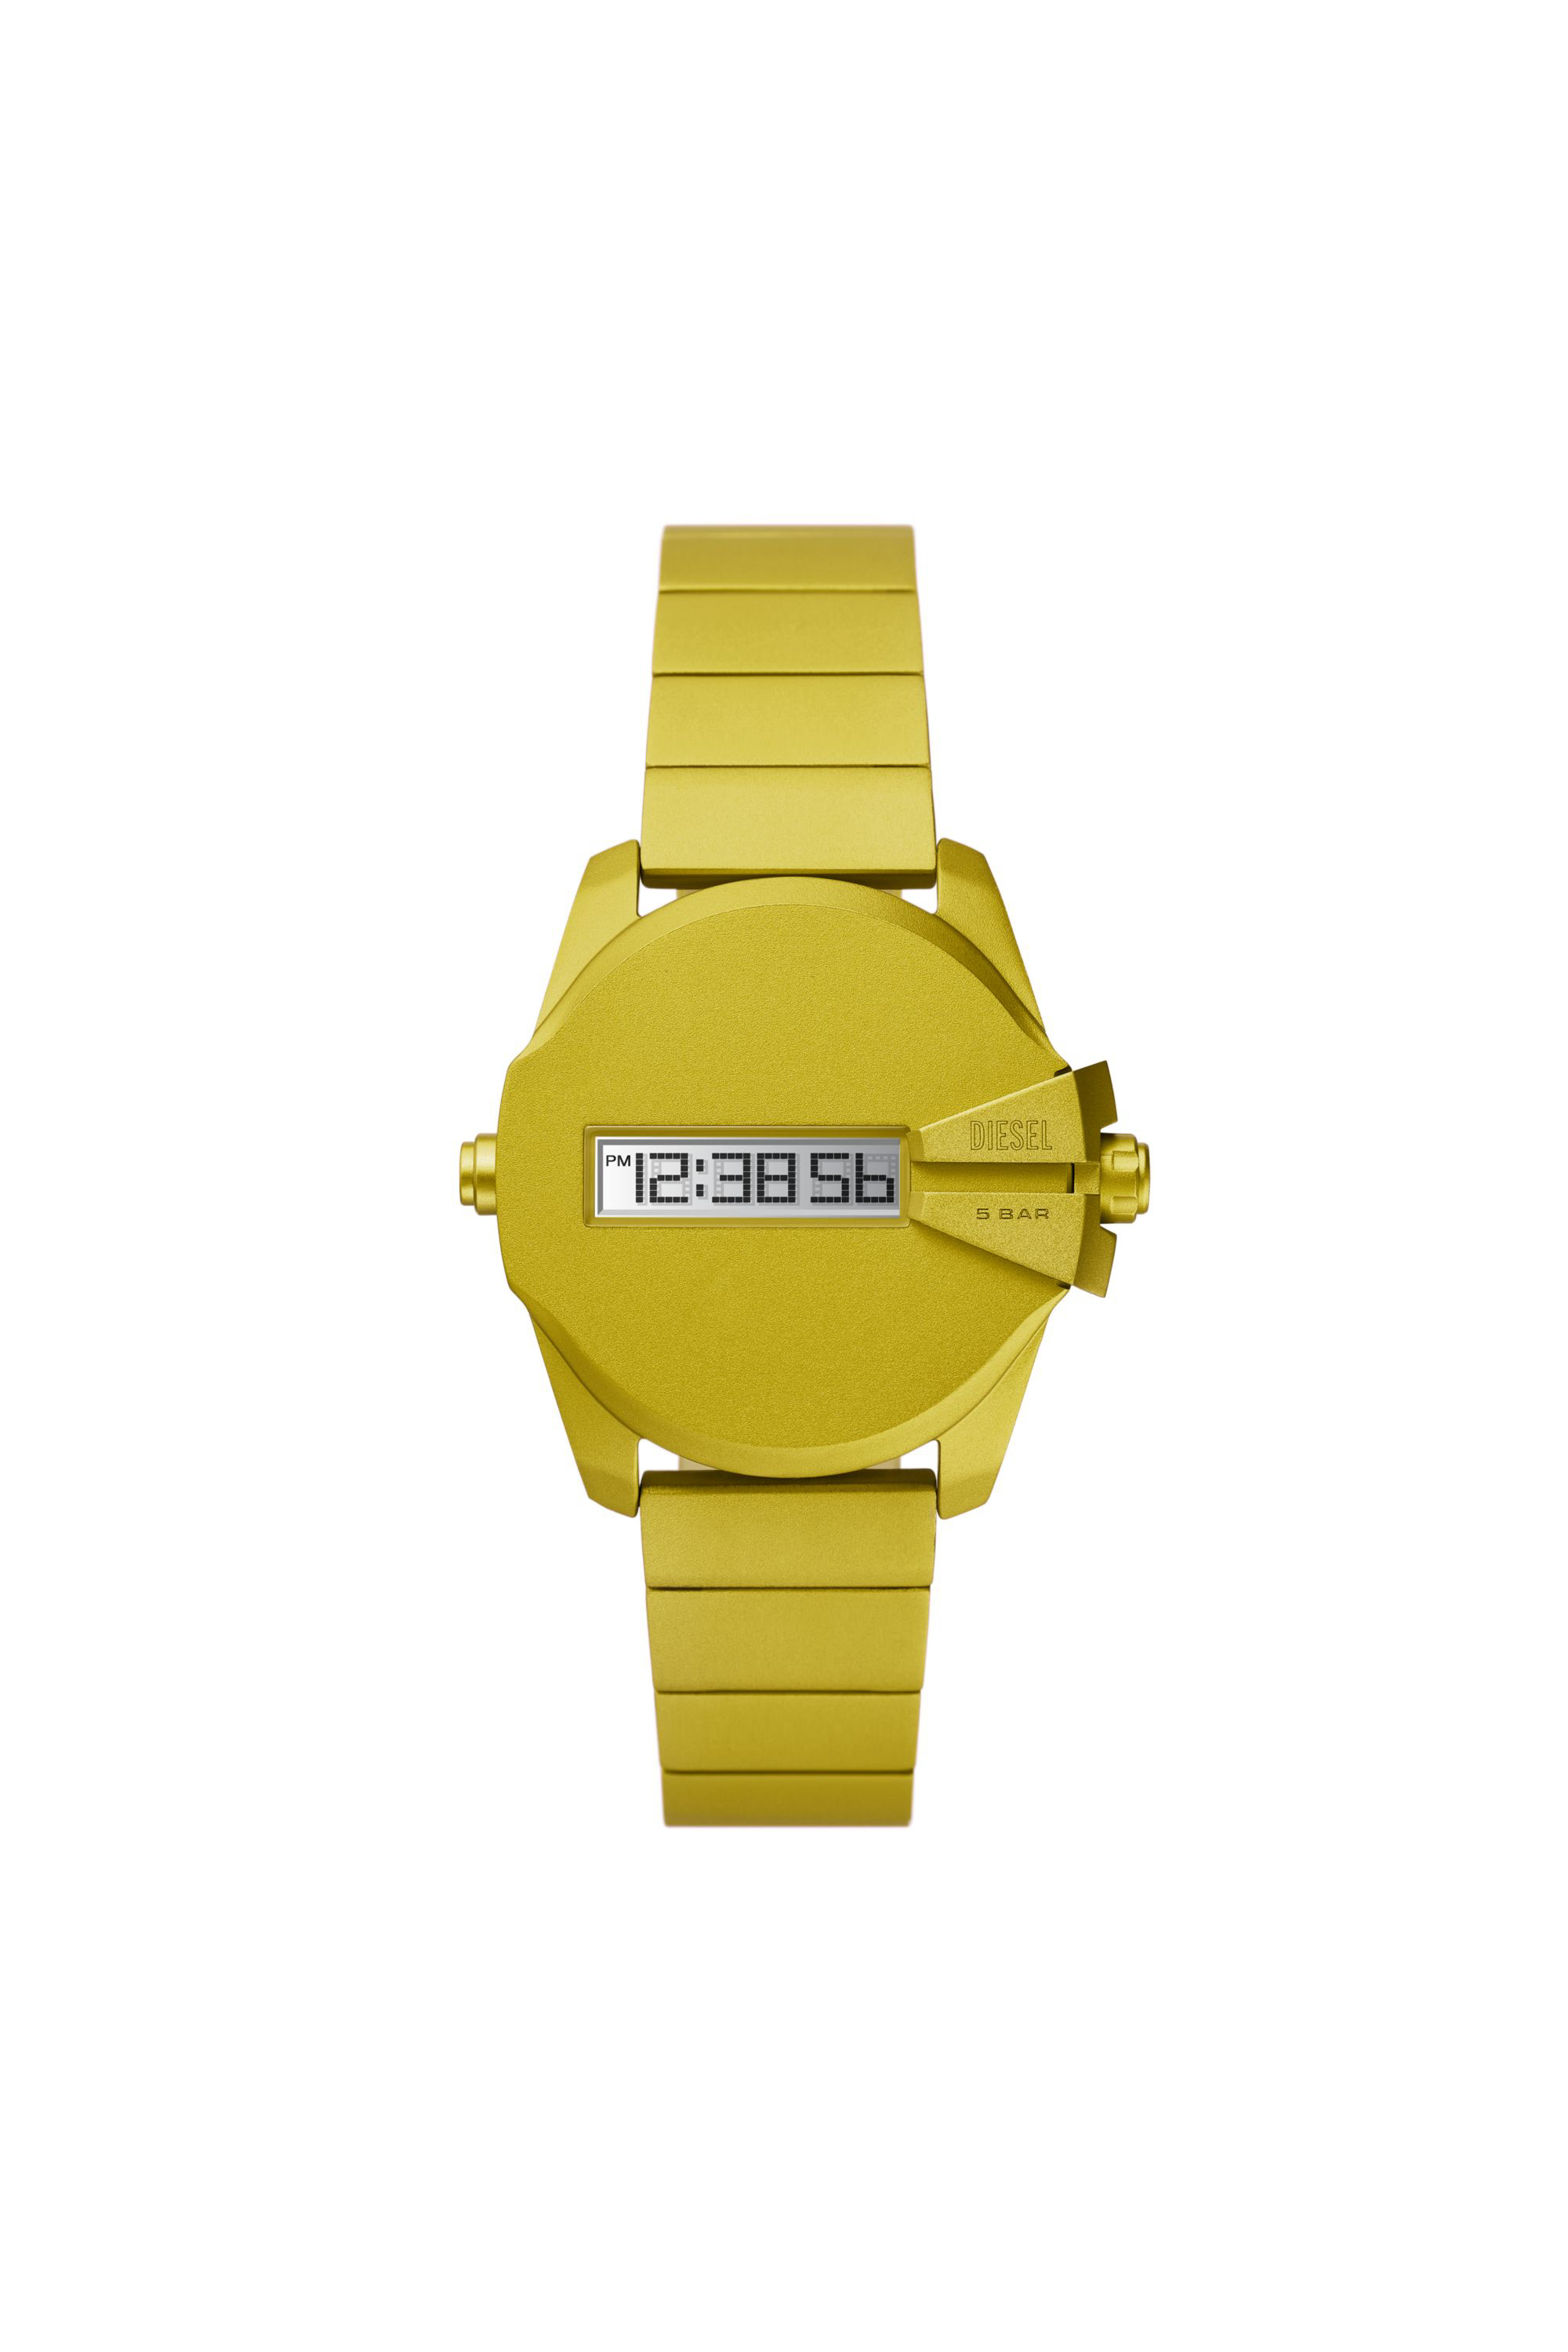 Diesel - DZ2207 WATCH, Male Baby chief digital yellow aluminum watch in イエロー - Image 1